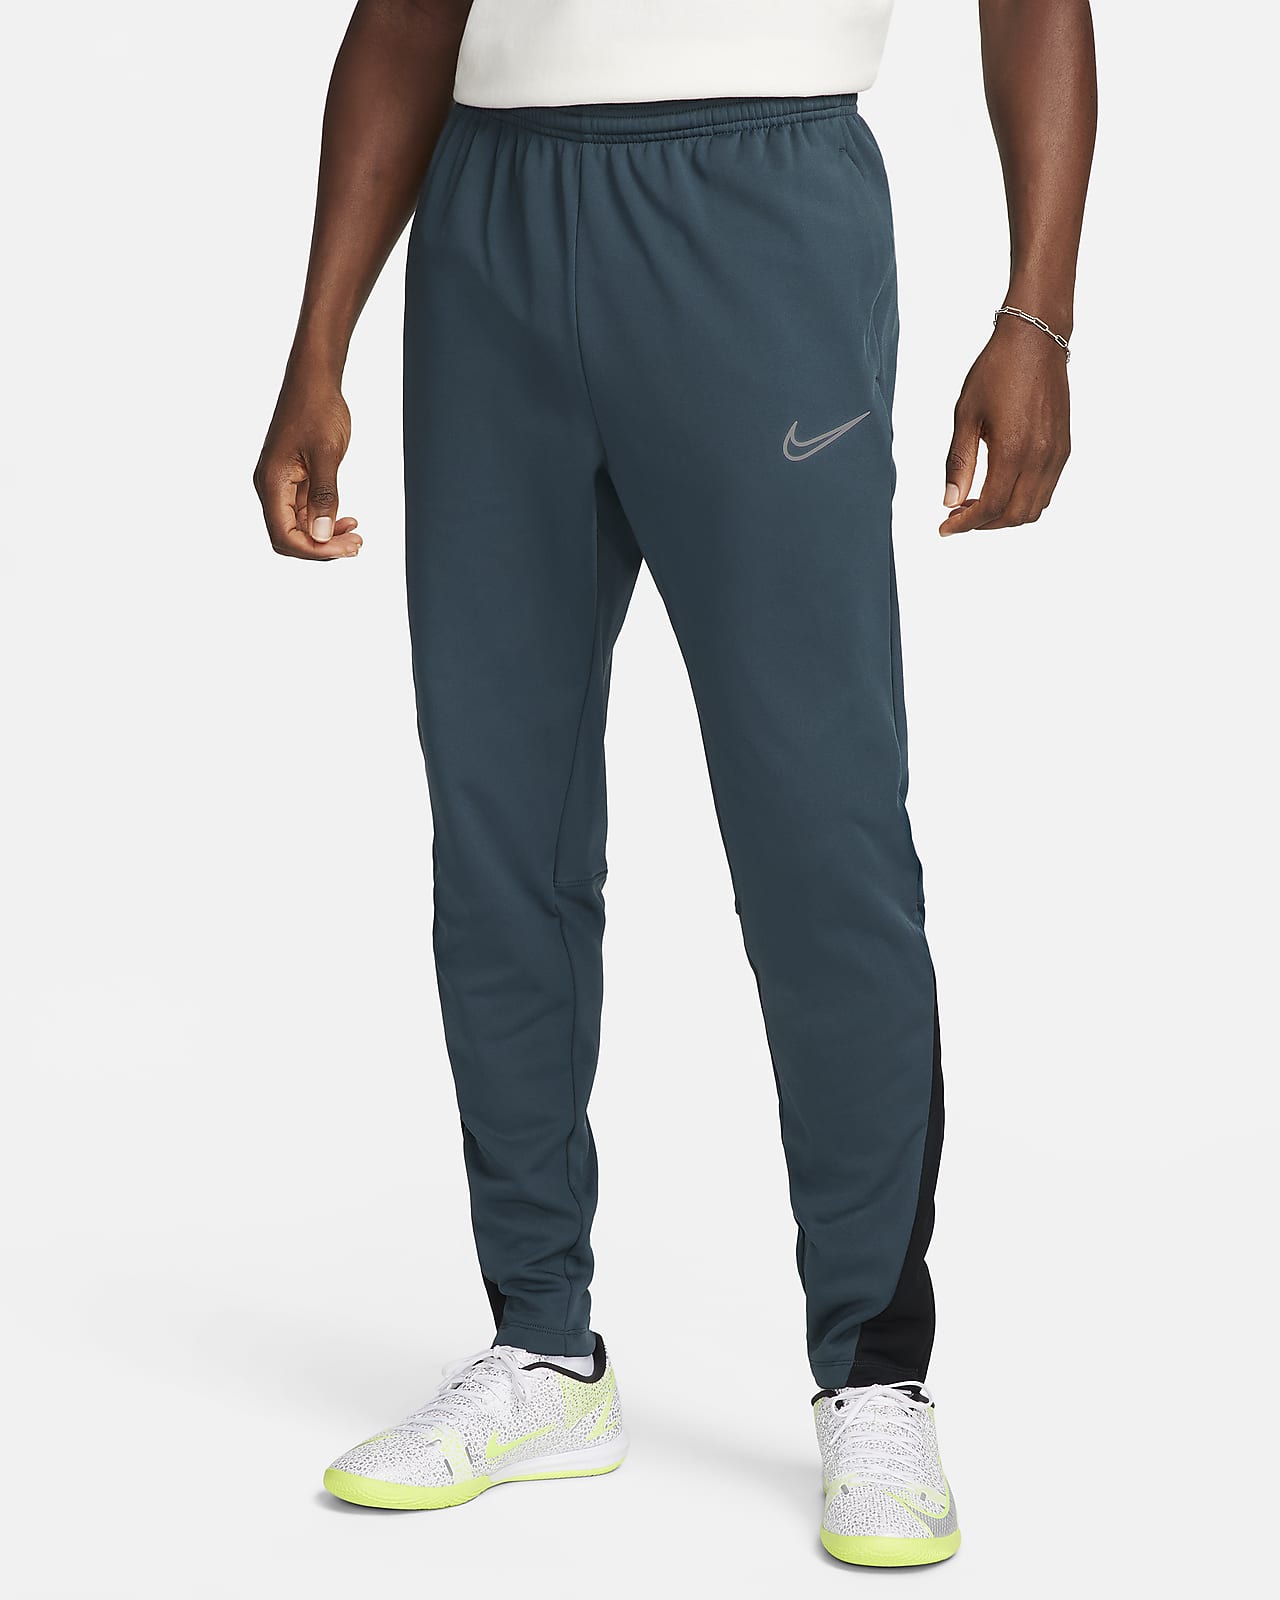 NIKE Men's $70 STRIKE Academy 21 Tapered Football Soccer Pants Jogger  Pockets | eBay